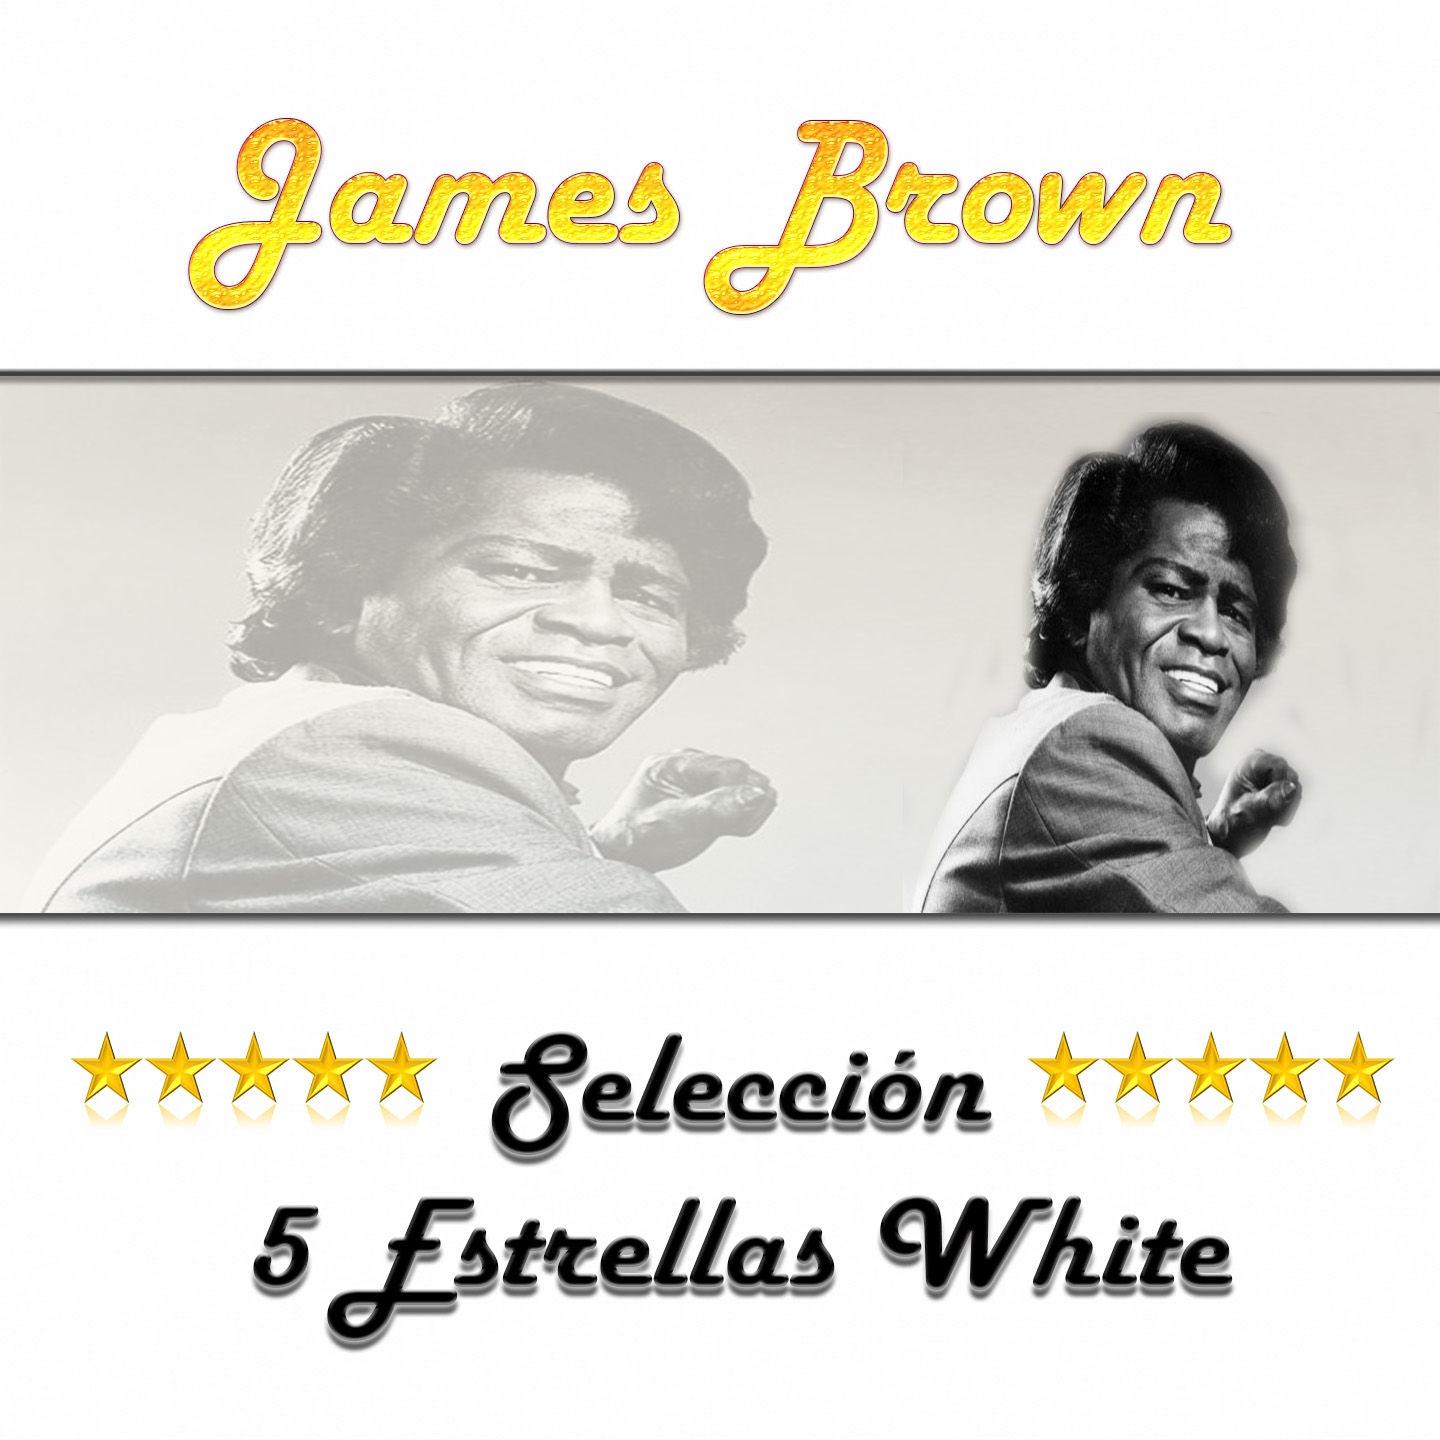 James Brown, Seleccio n 5 Estrellas White